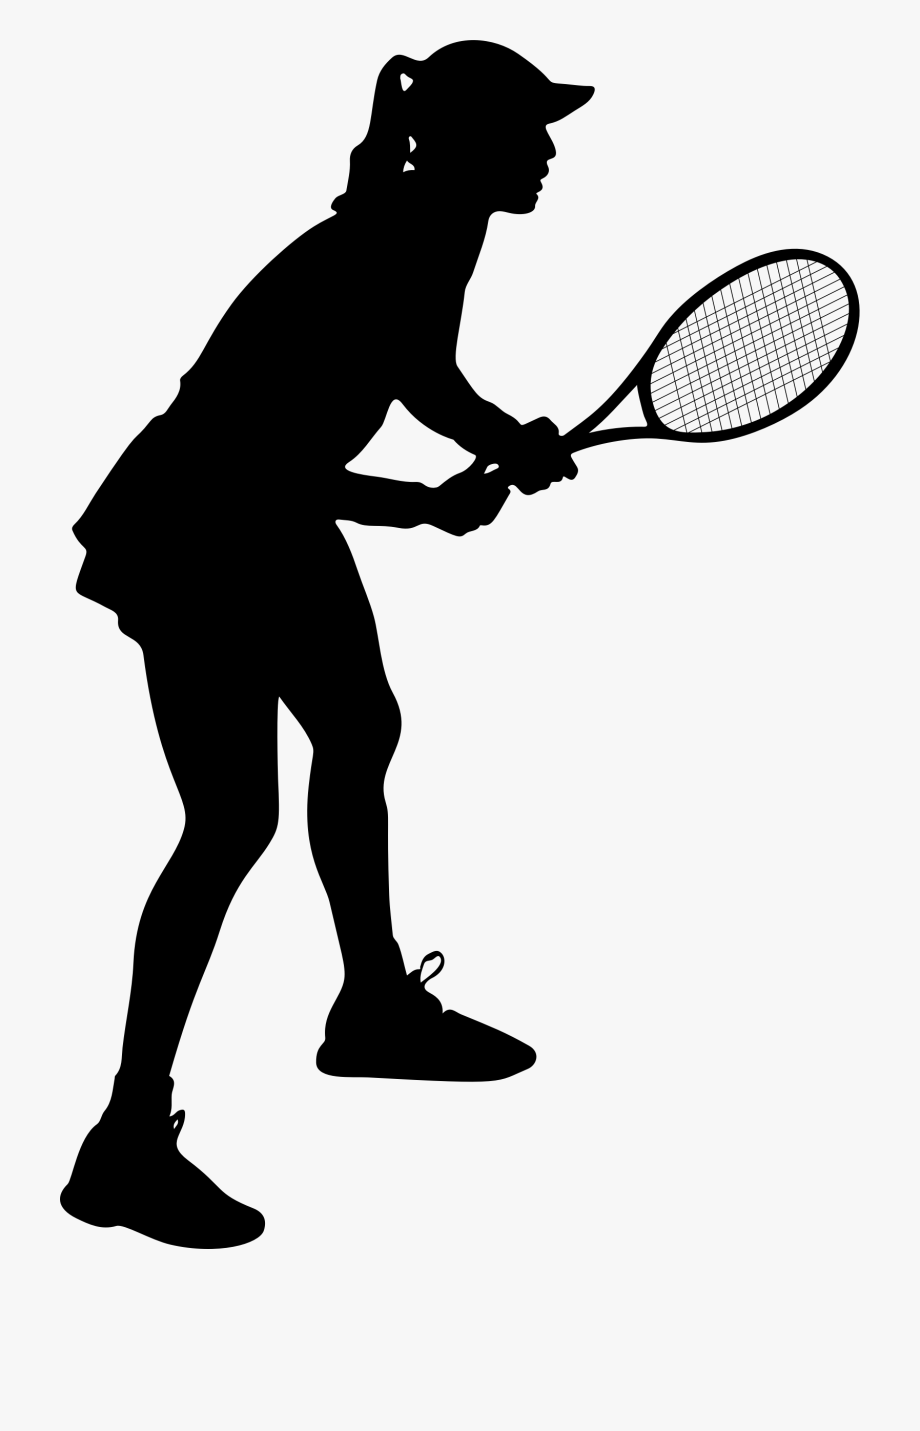 Woman tennis player.